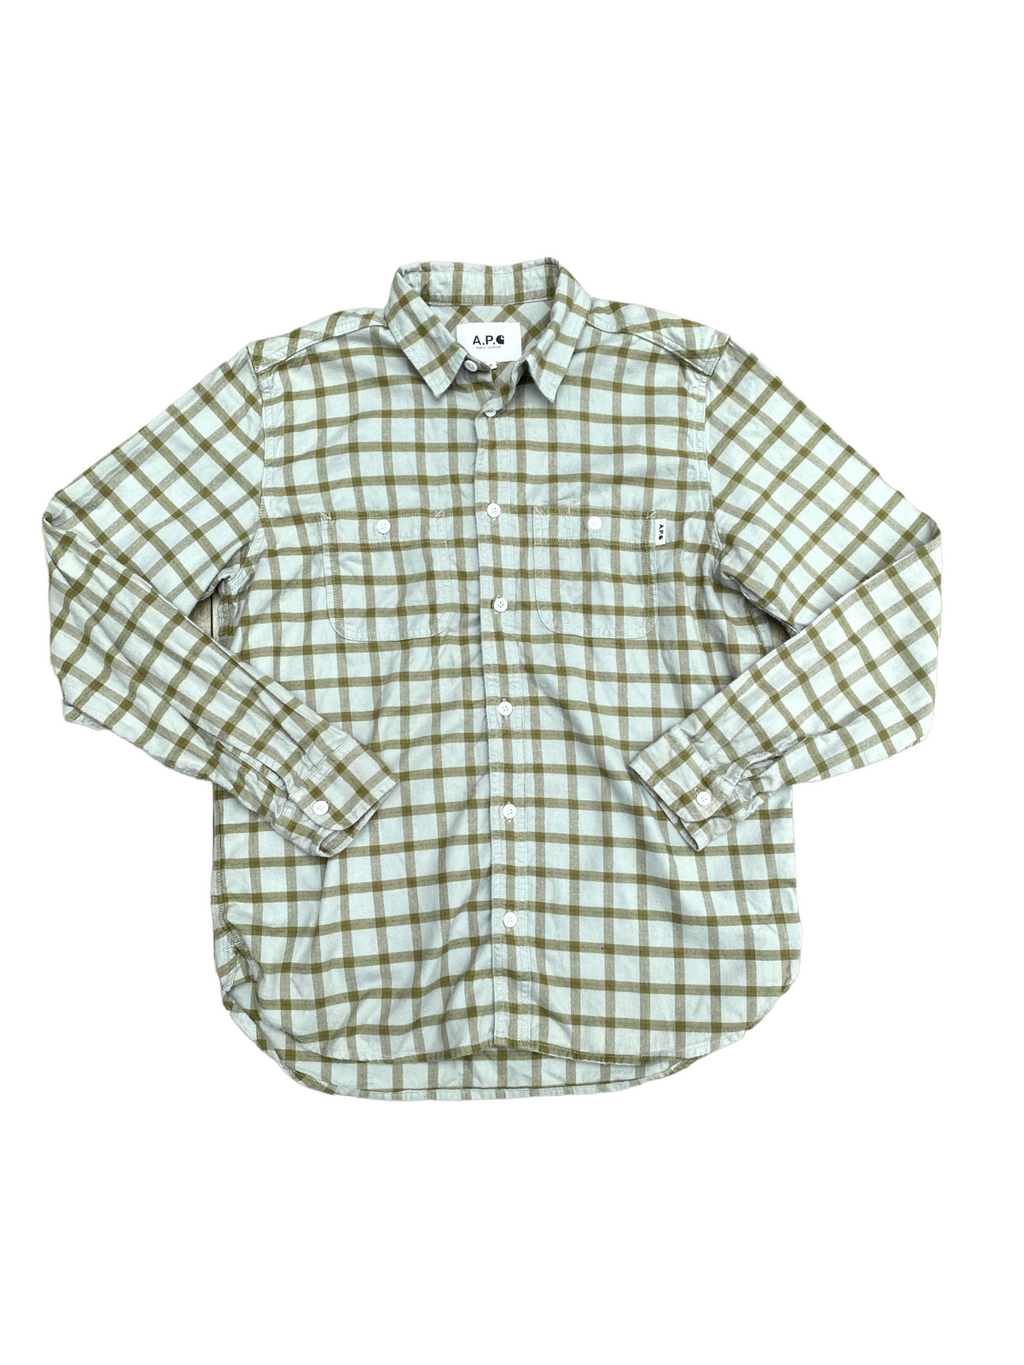 Beige checkered shirt